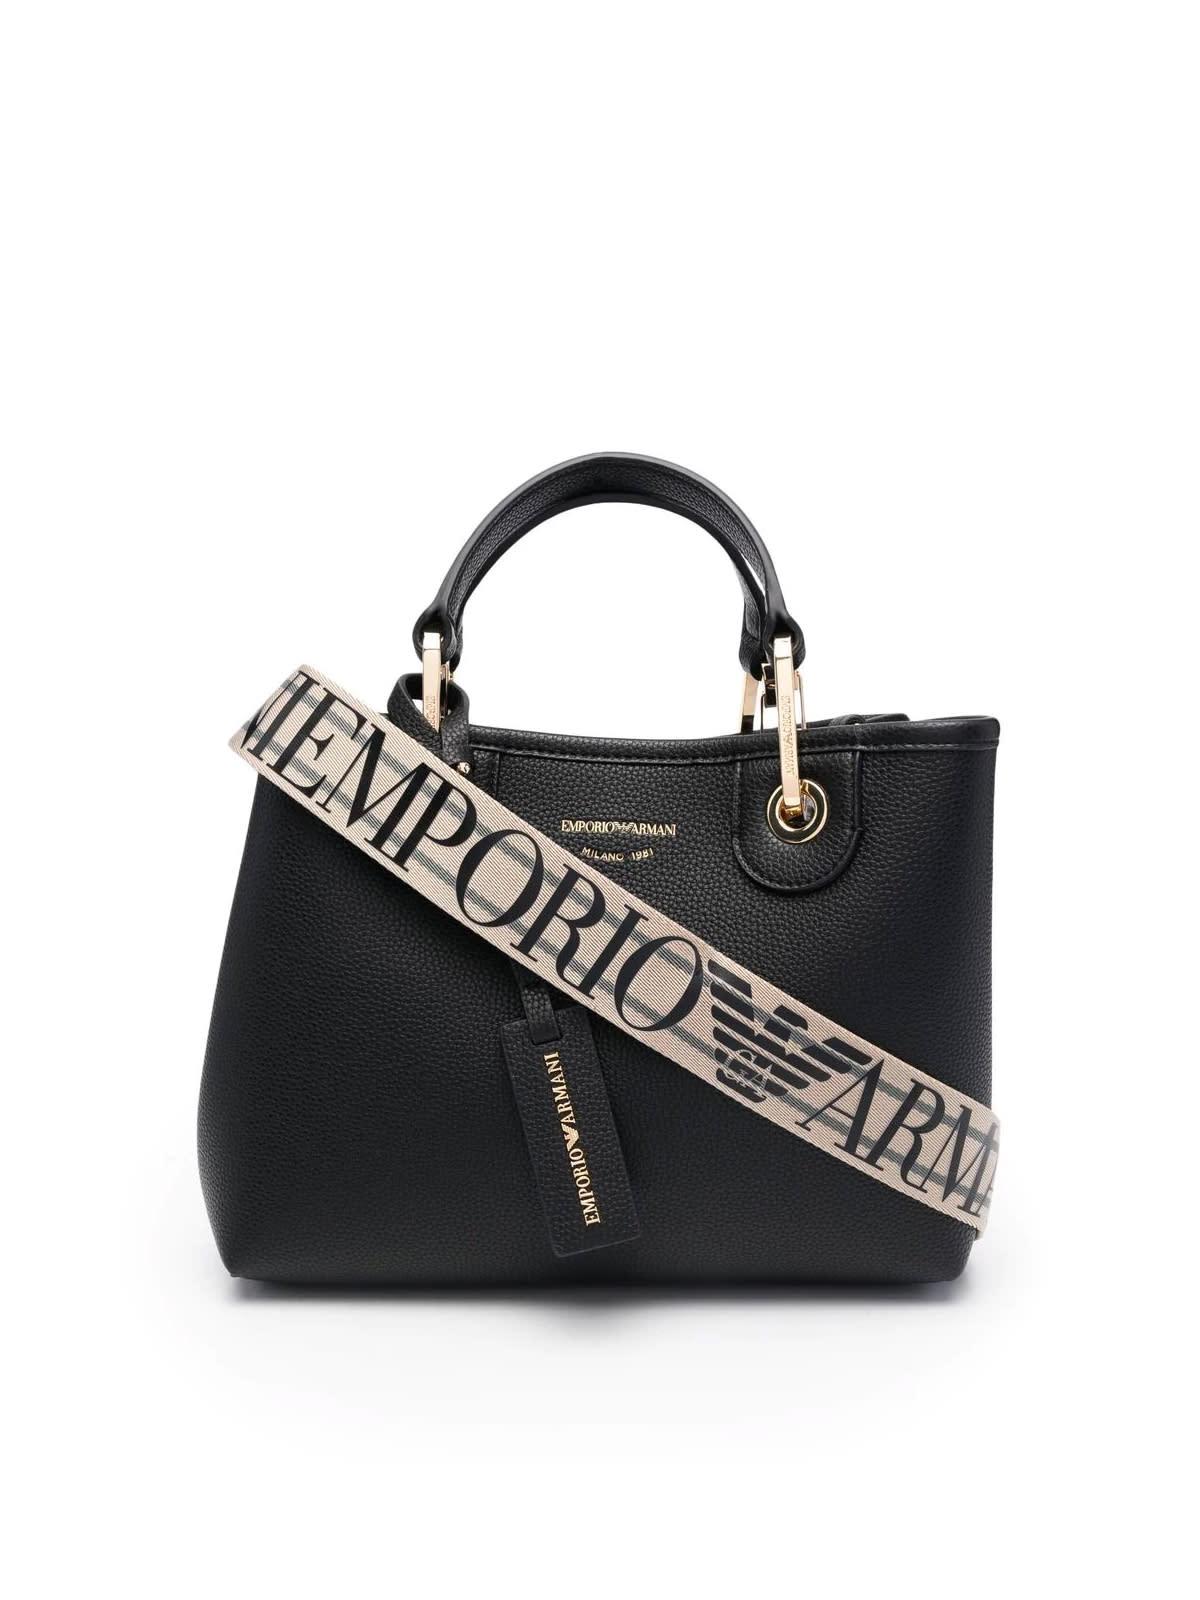 Emporio Armani Shopping Bag in Black | Lyst